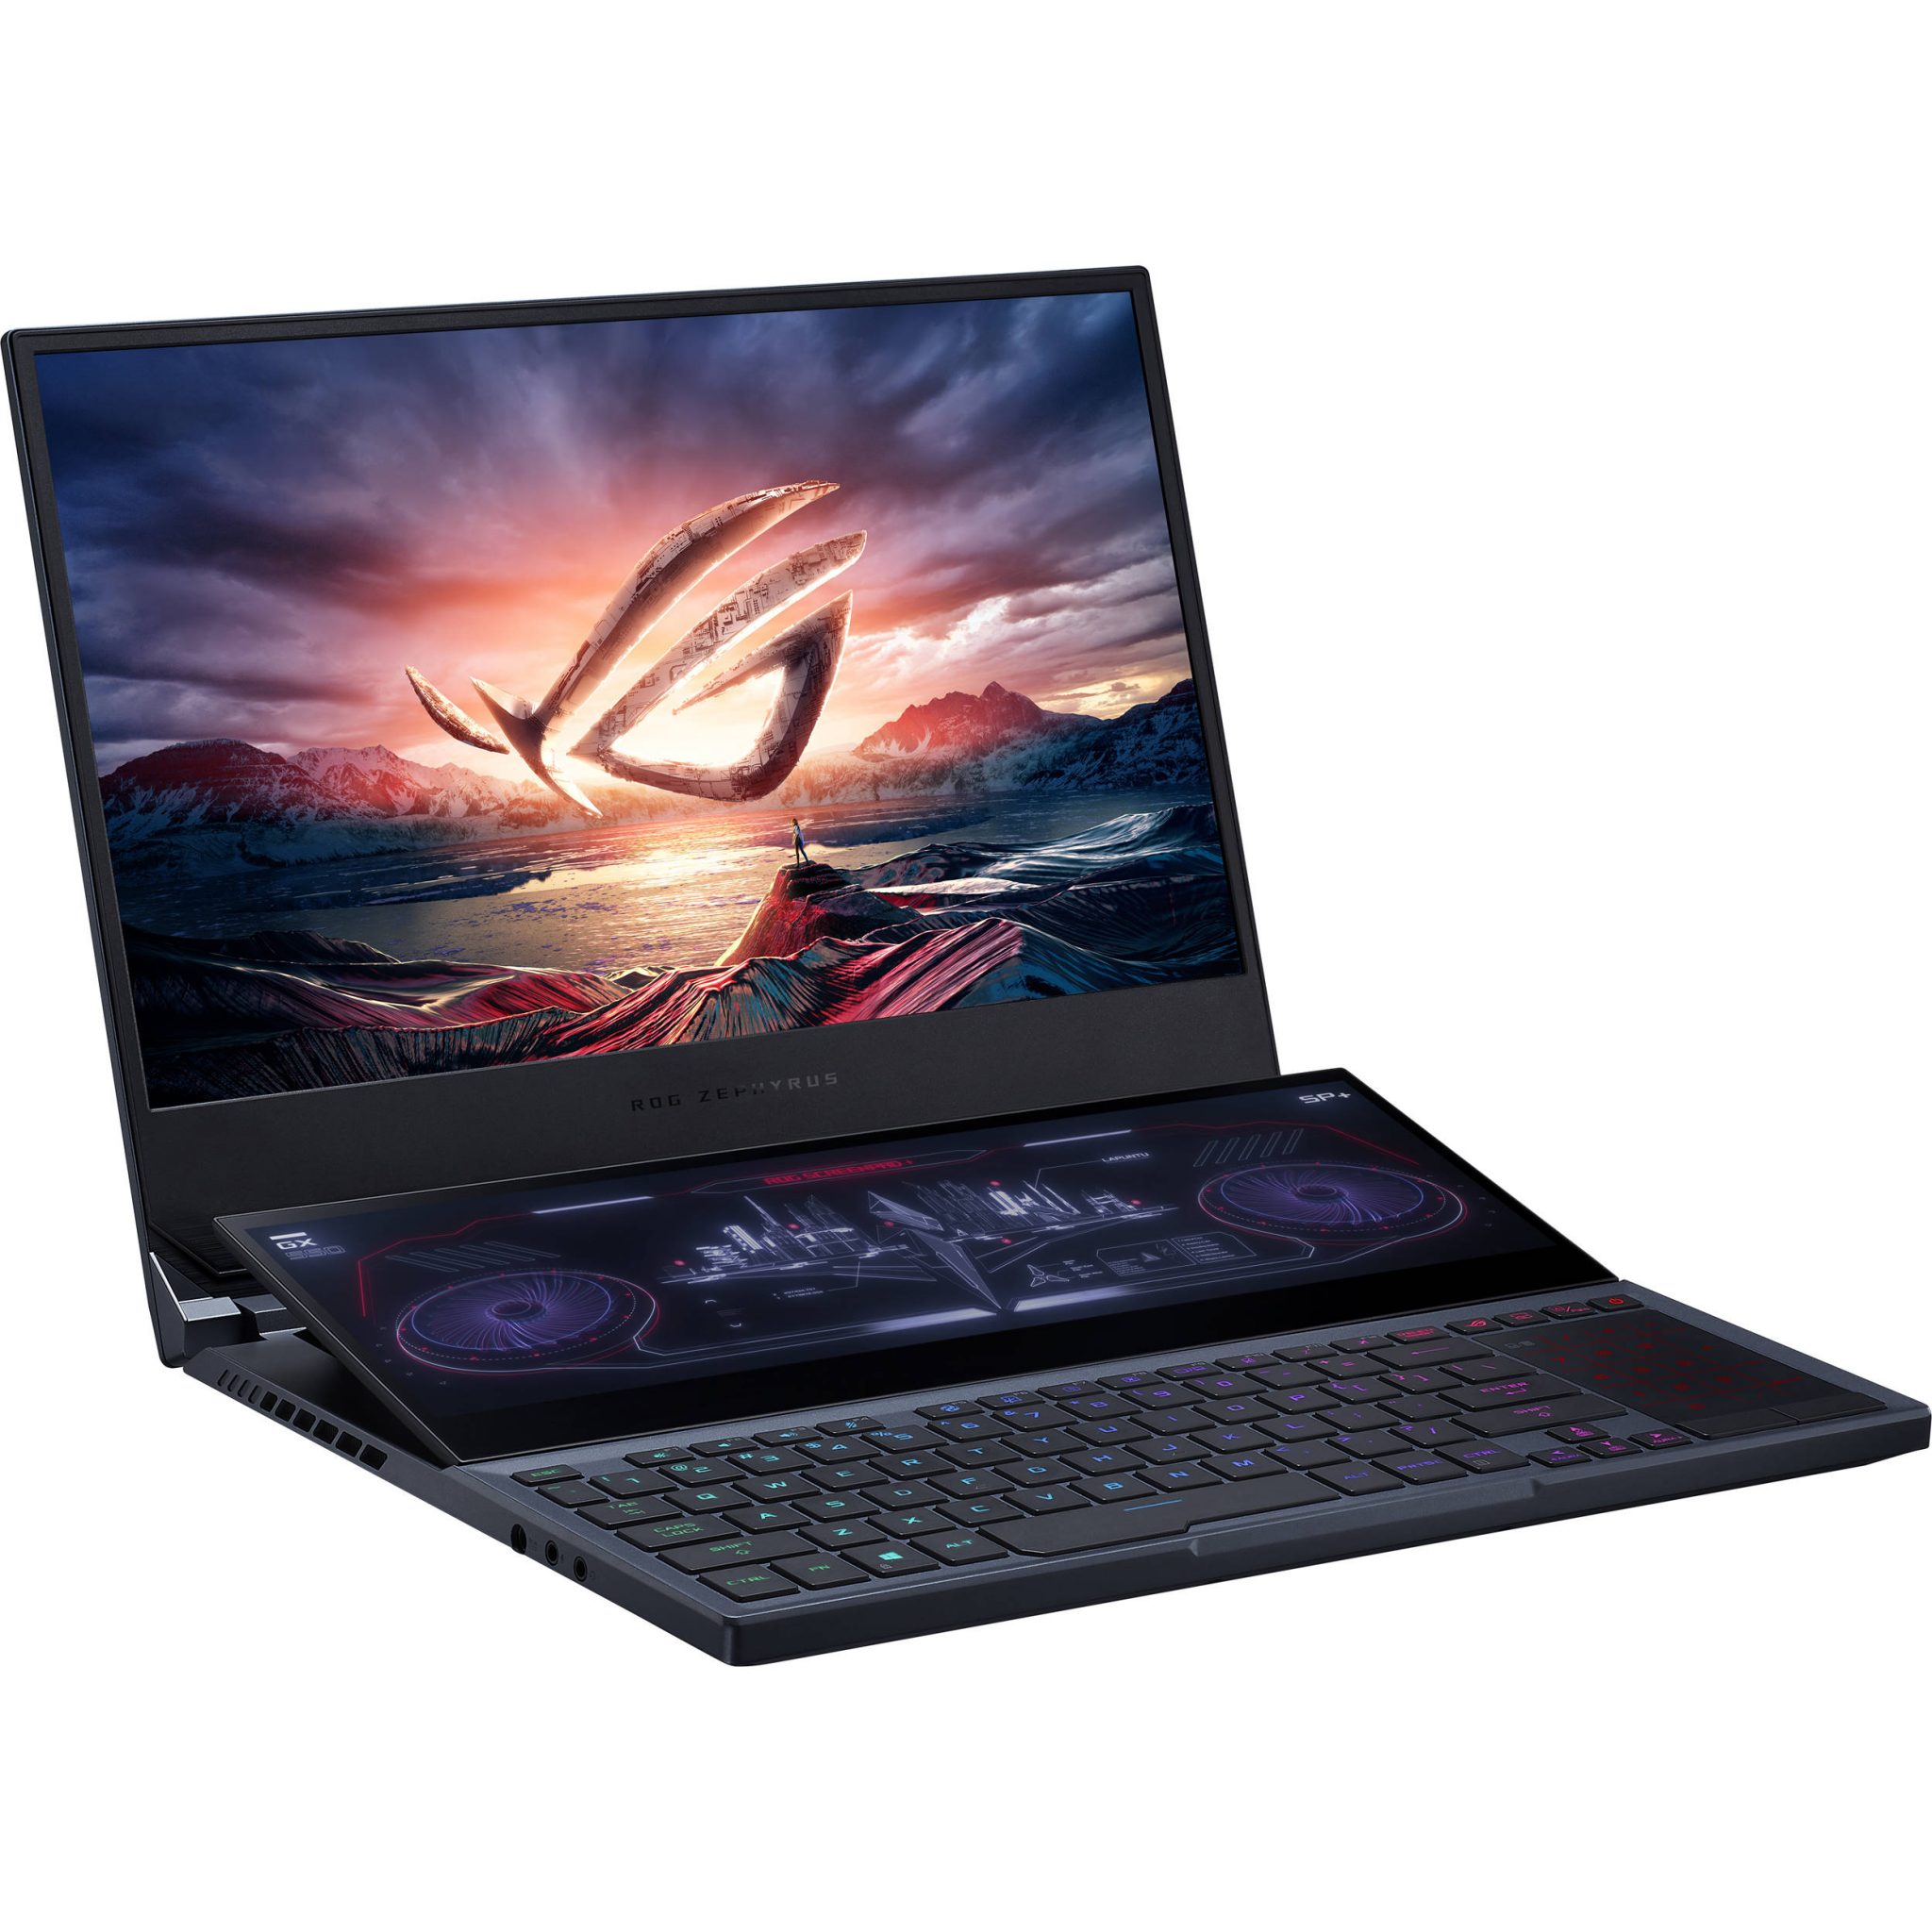 Asus Zephyrus Duo 15 GX550 gaming content creator laptop review